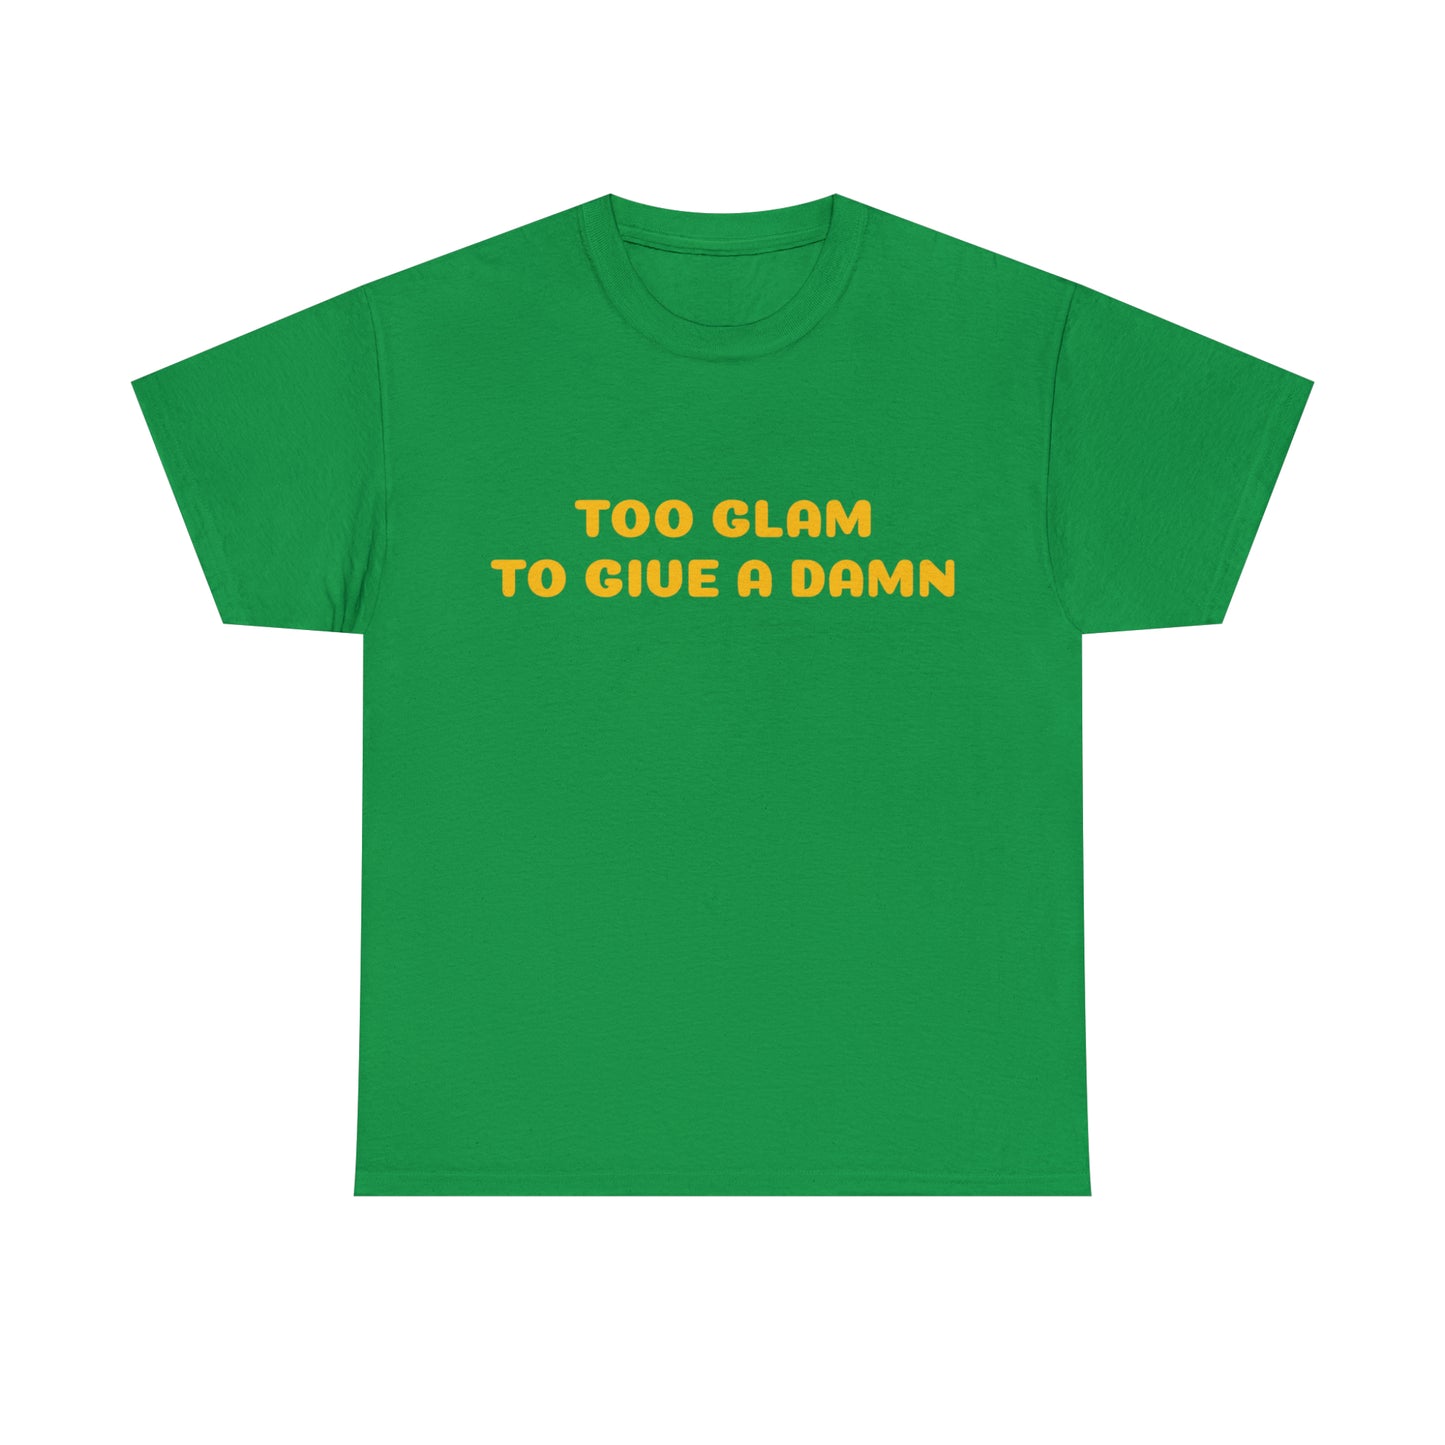 Custom Parody T-shirt, Too glam to give a damn shirt design